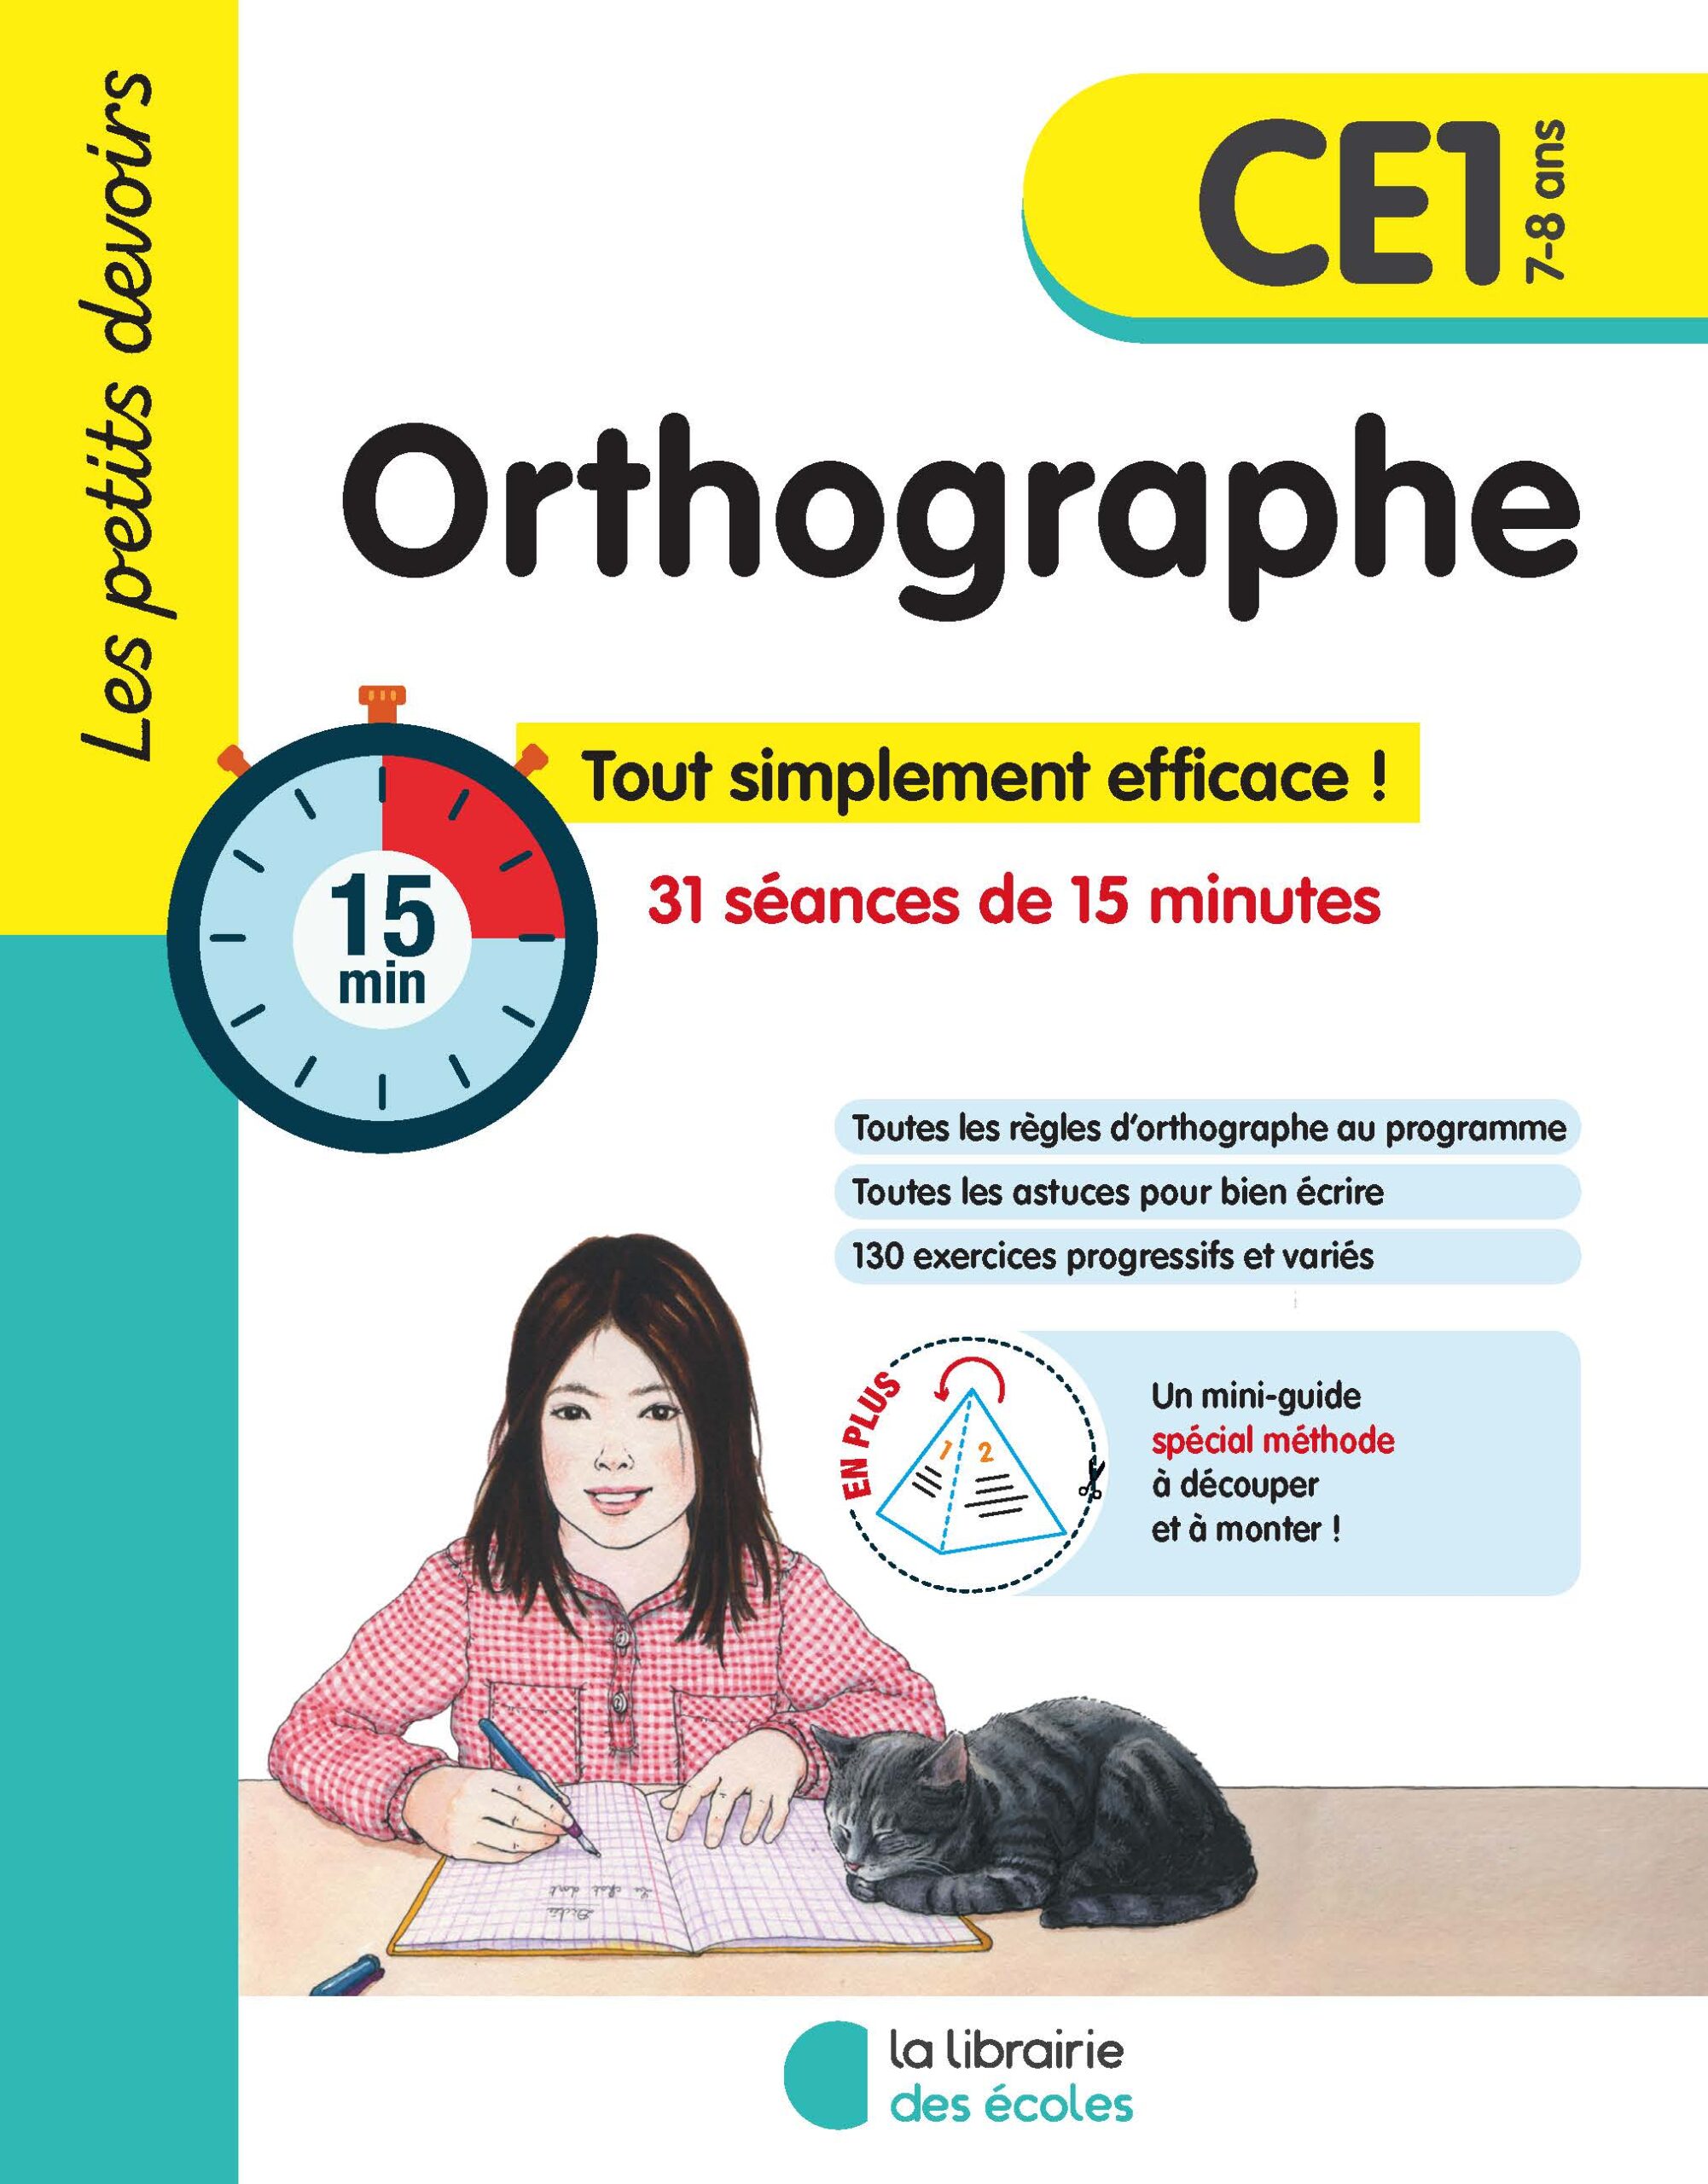 Orthographe CE1 : leçons, exercices et évaluations - Prof Innovant